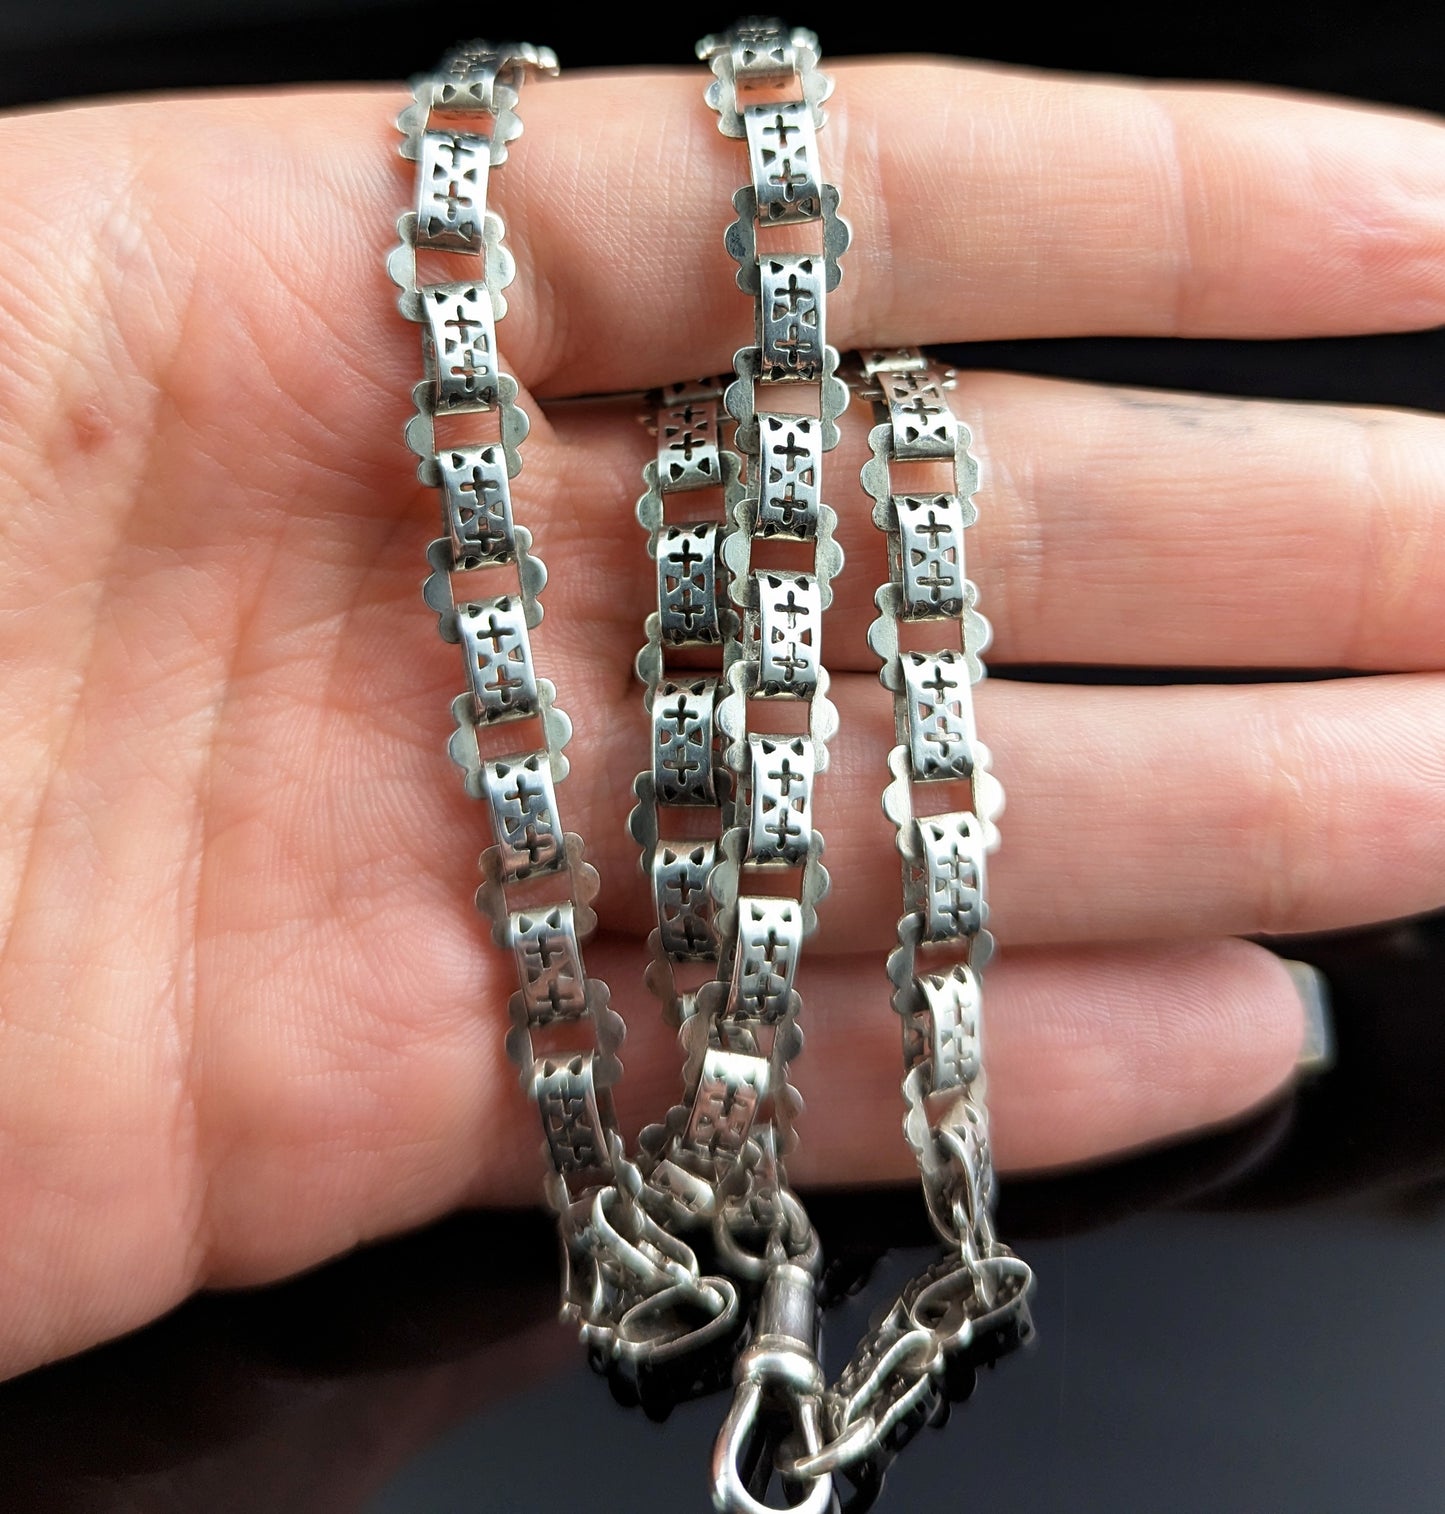 Antique Victorian silver book chain necklace, Victorian collar